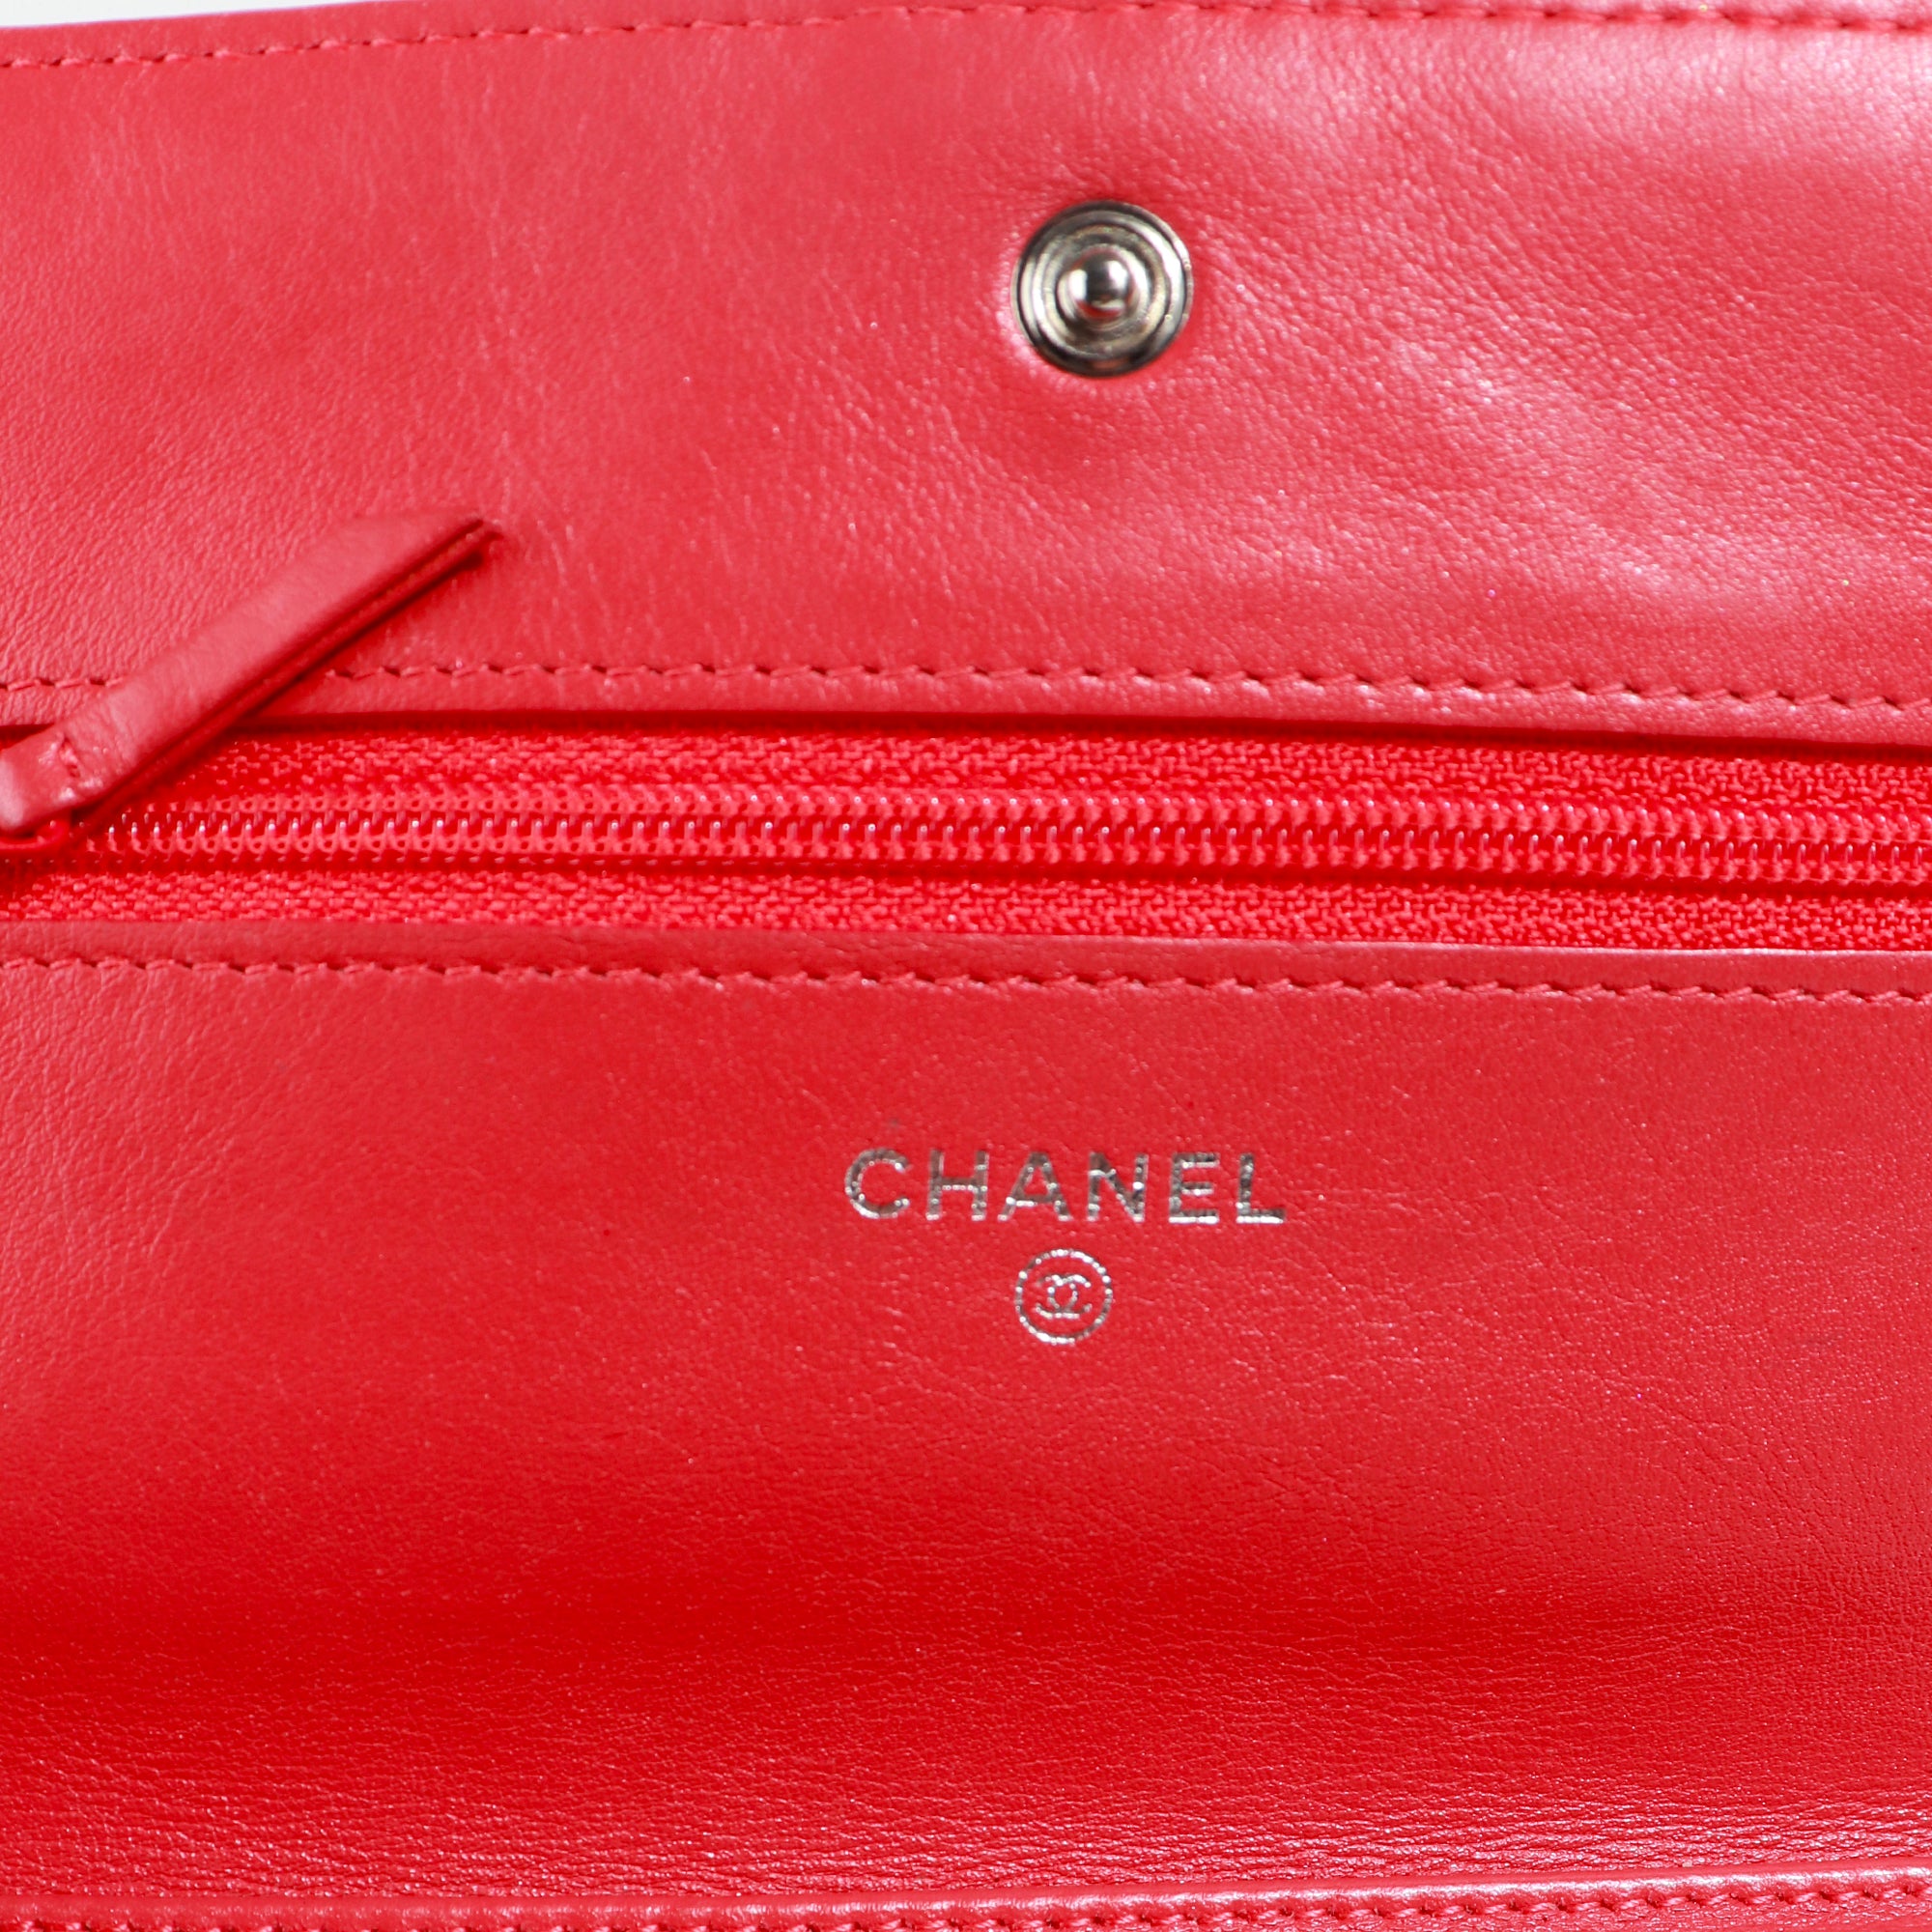 CHANEL - Sac Wallet On Chain Timeless en cuir verni rose